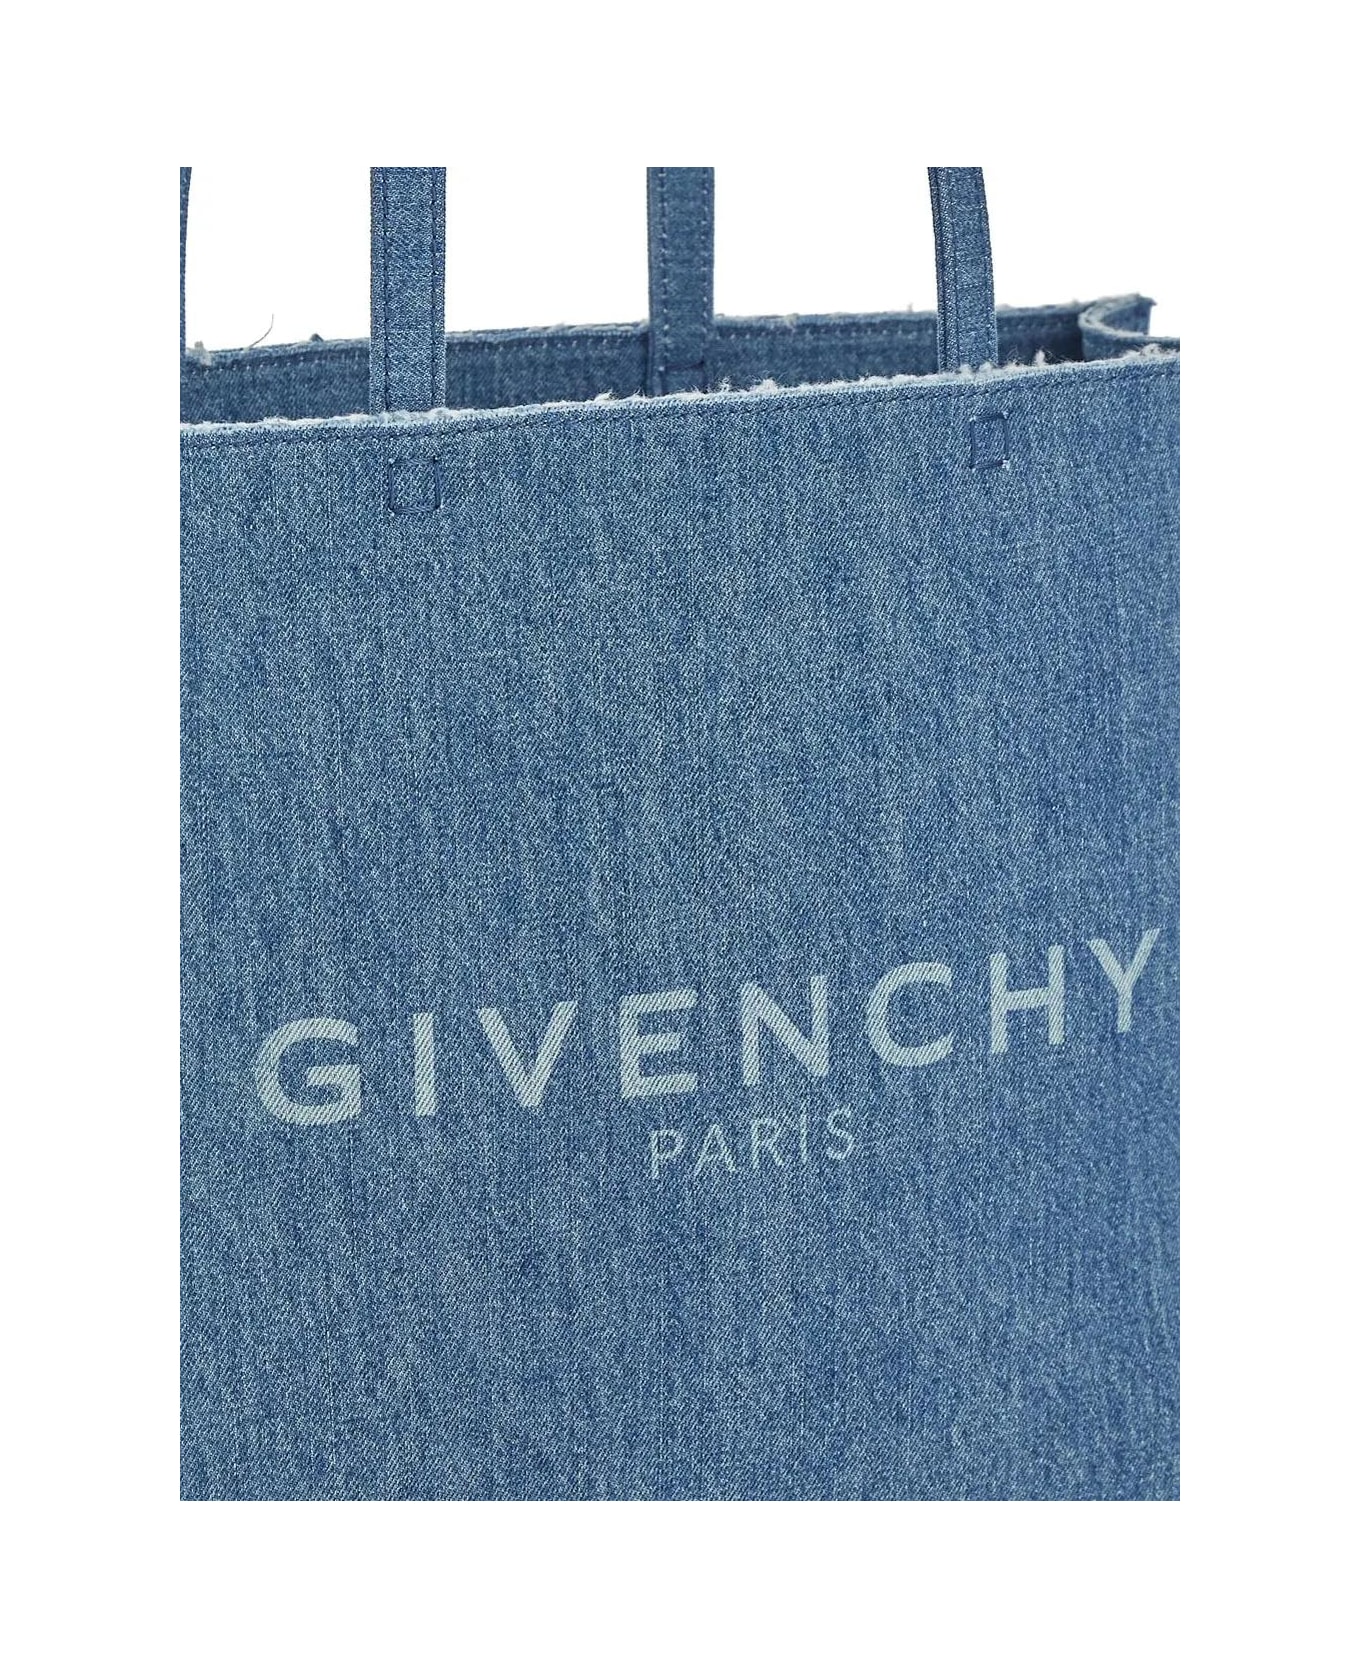 Givenchy G Tote Large Shopper Bag - Blue